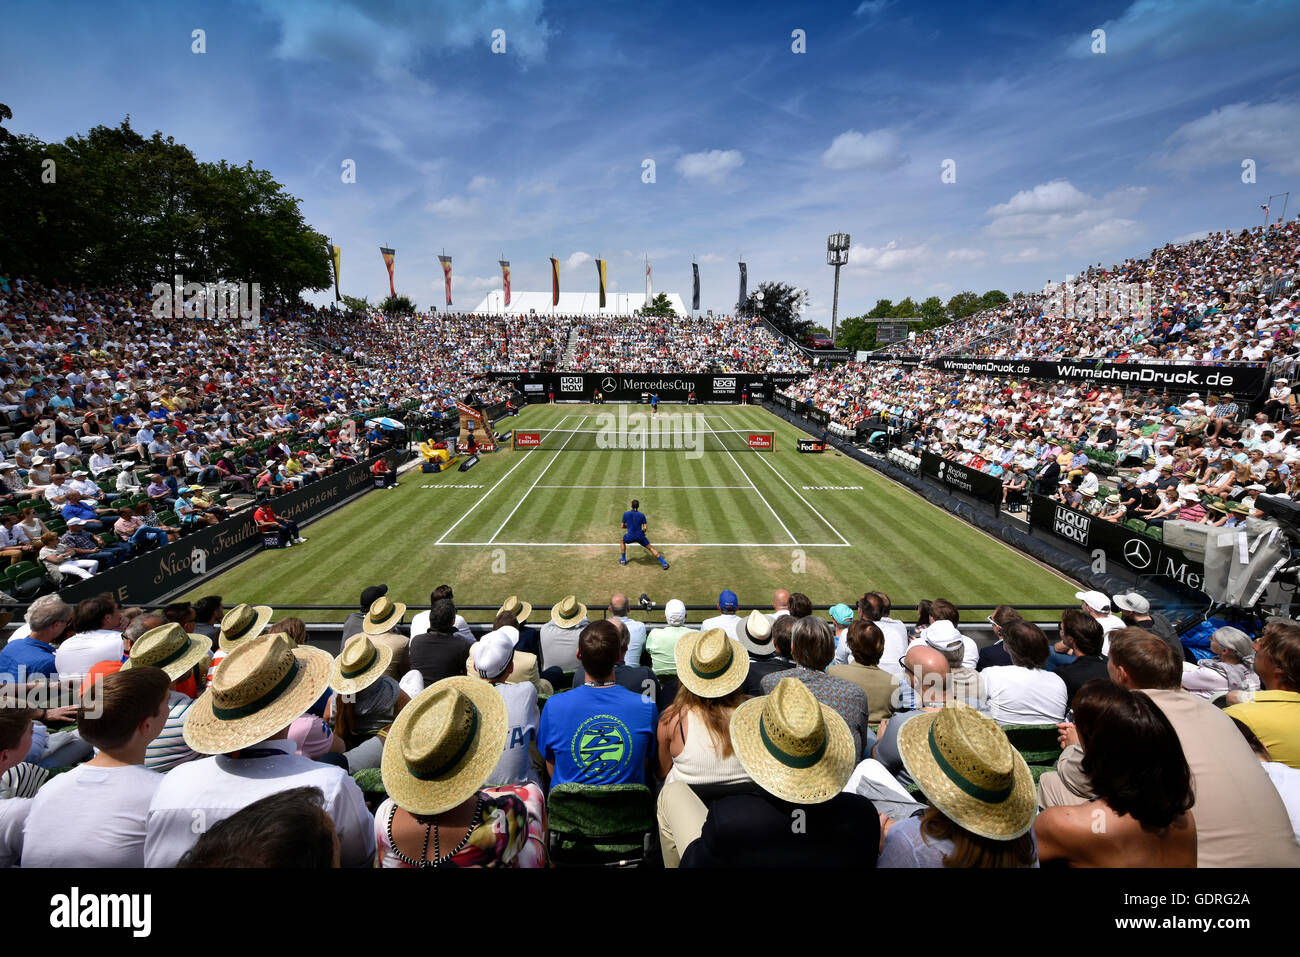 Tenis, espectadores en el centro de la cancha, Roger Federer, Sui, MercedesCup de Stuttgart, Baden-Württemberg, Alemania Foto de stock